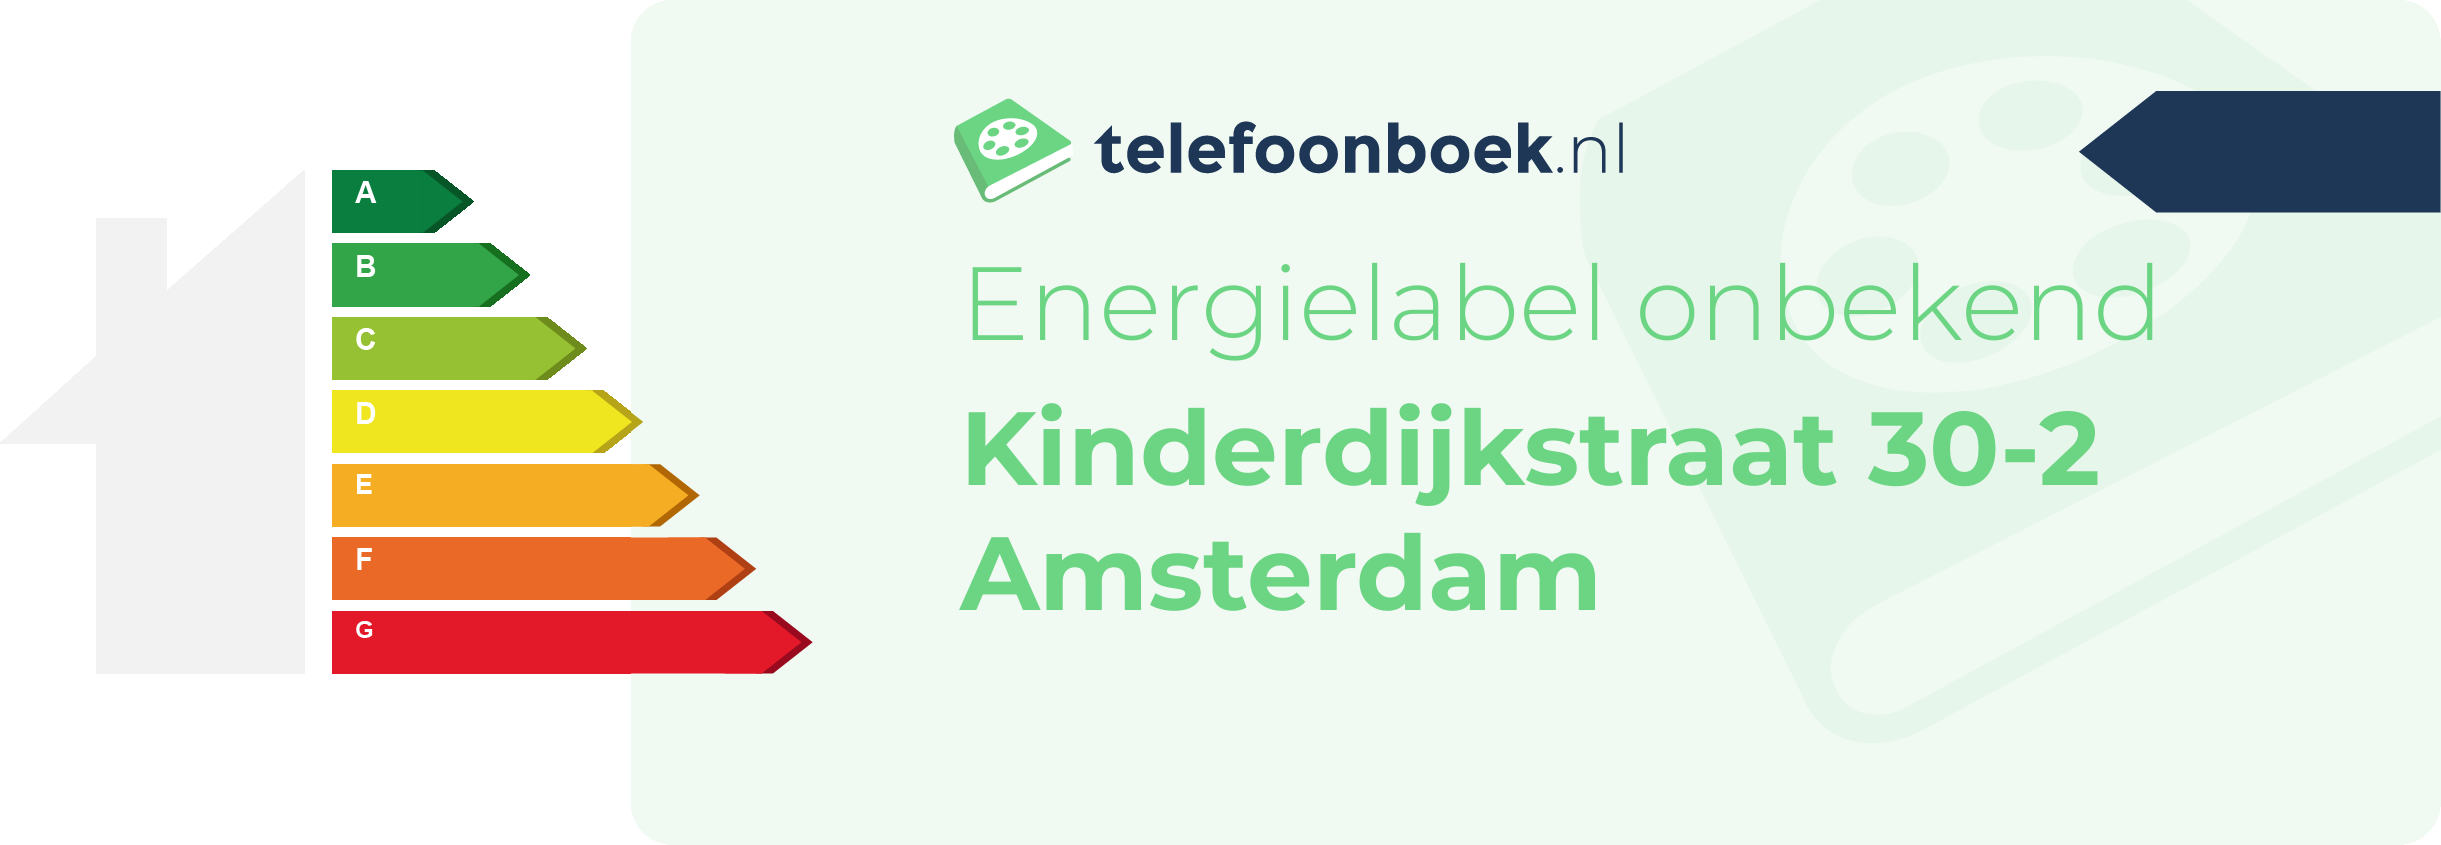 Energielabel Kinderdijkstraat 30-2 Amsterdam